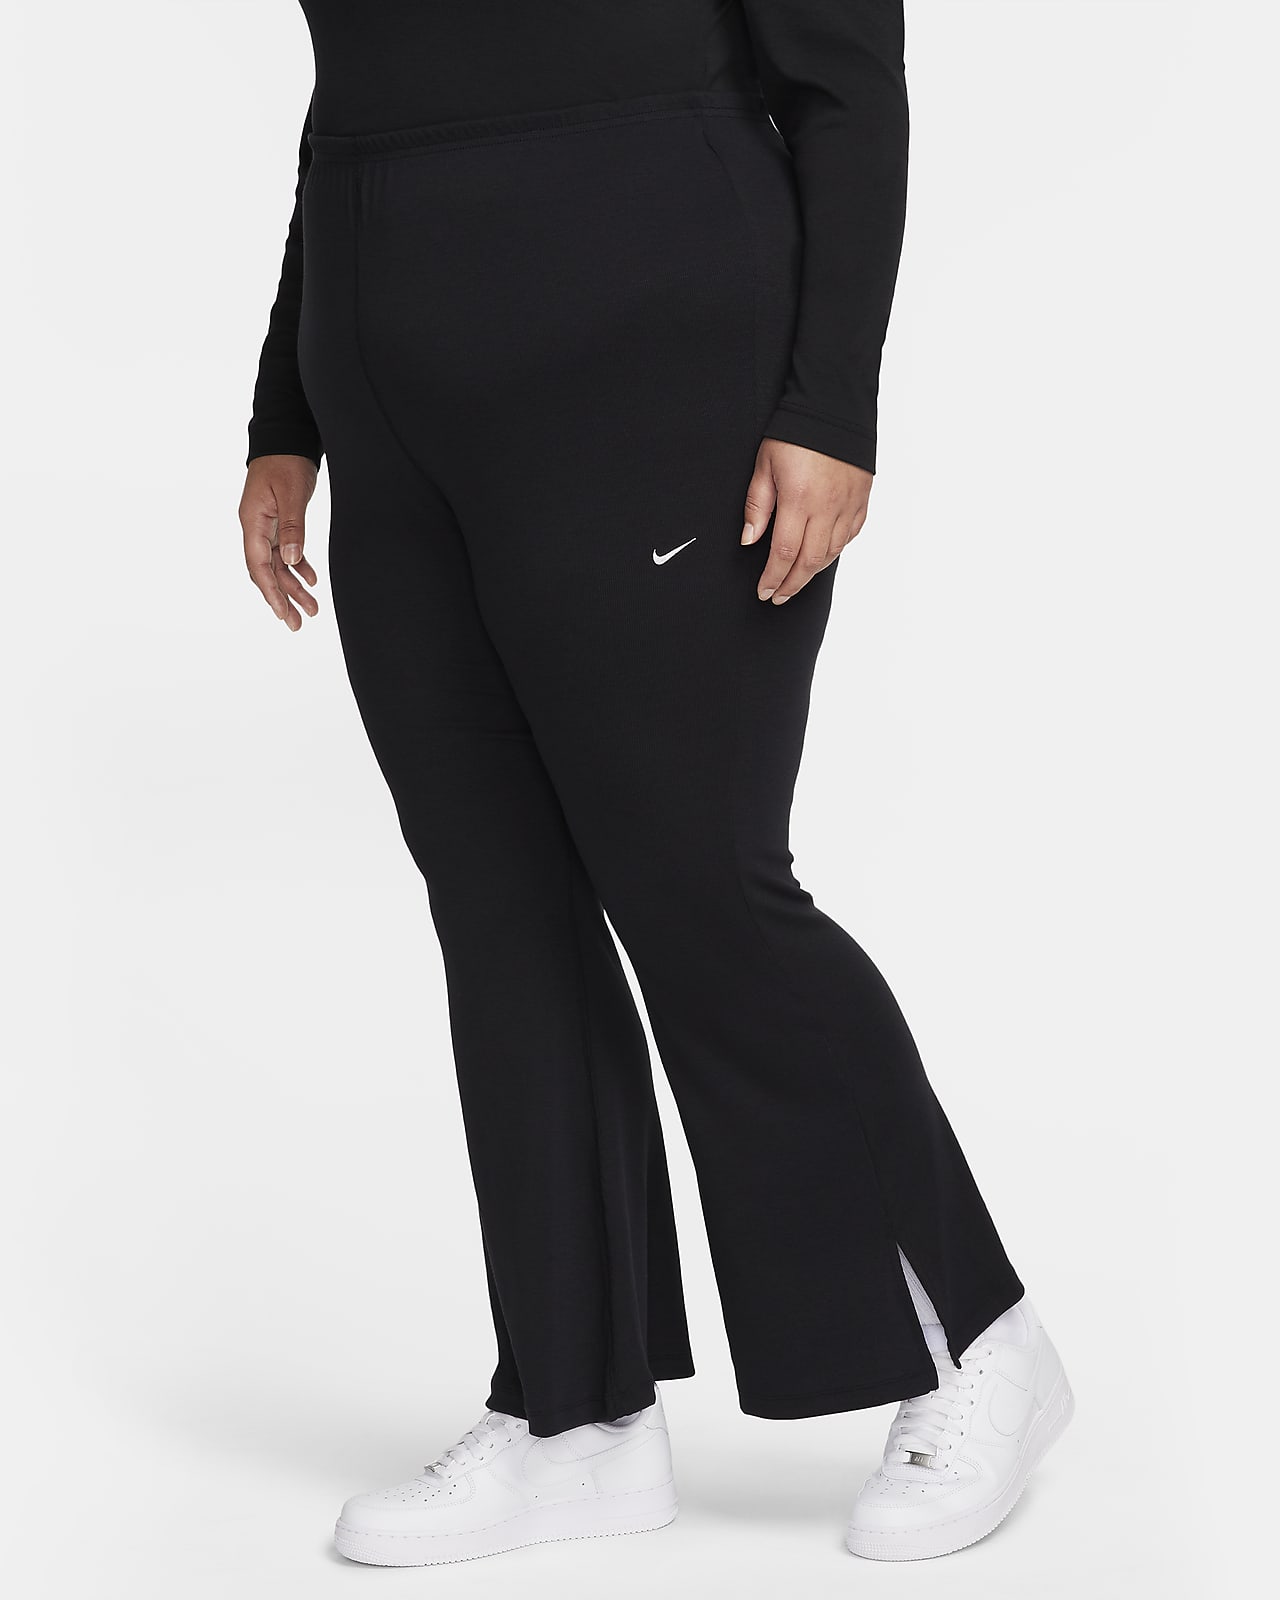 Nike Sportswear Chill Knit Mini Fitilli Sıkı Kesimli Bol Paçalı Kadın Taytı (Büyük Beden)